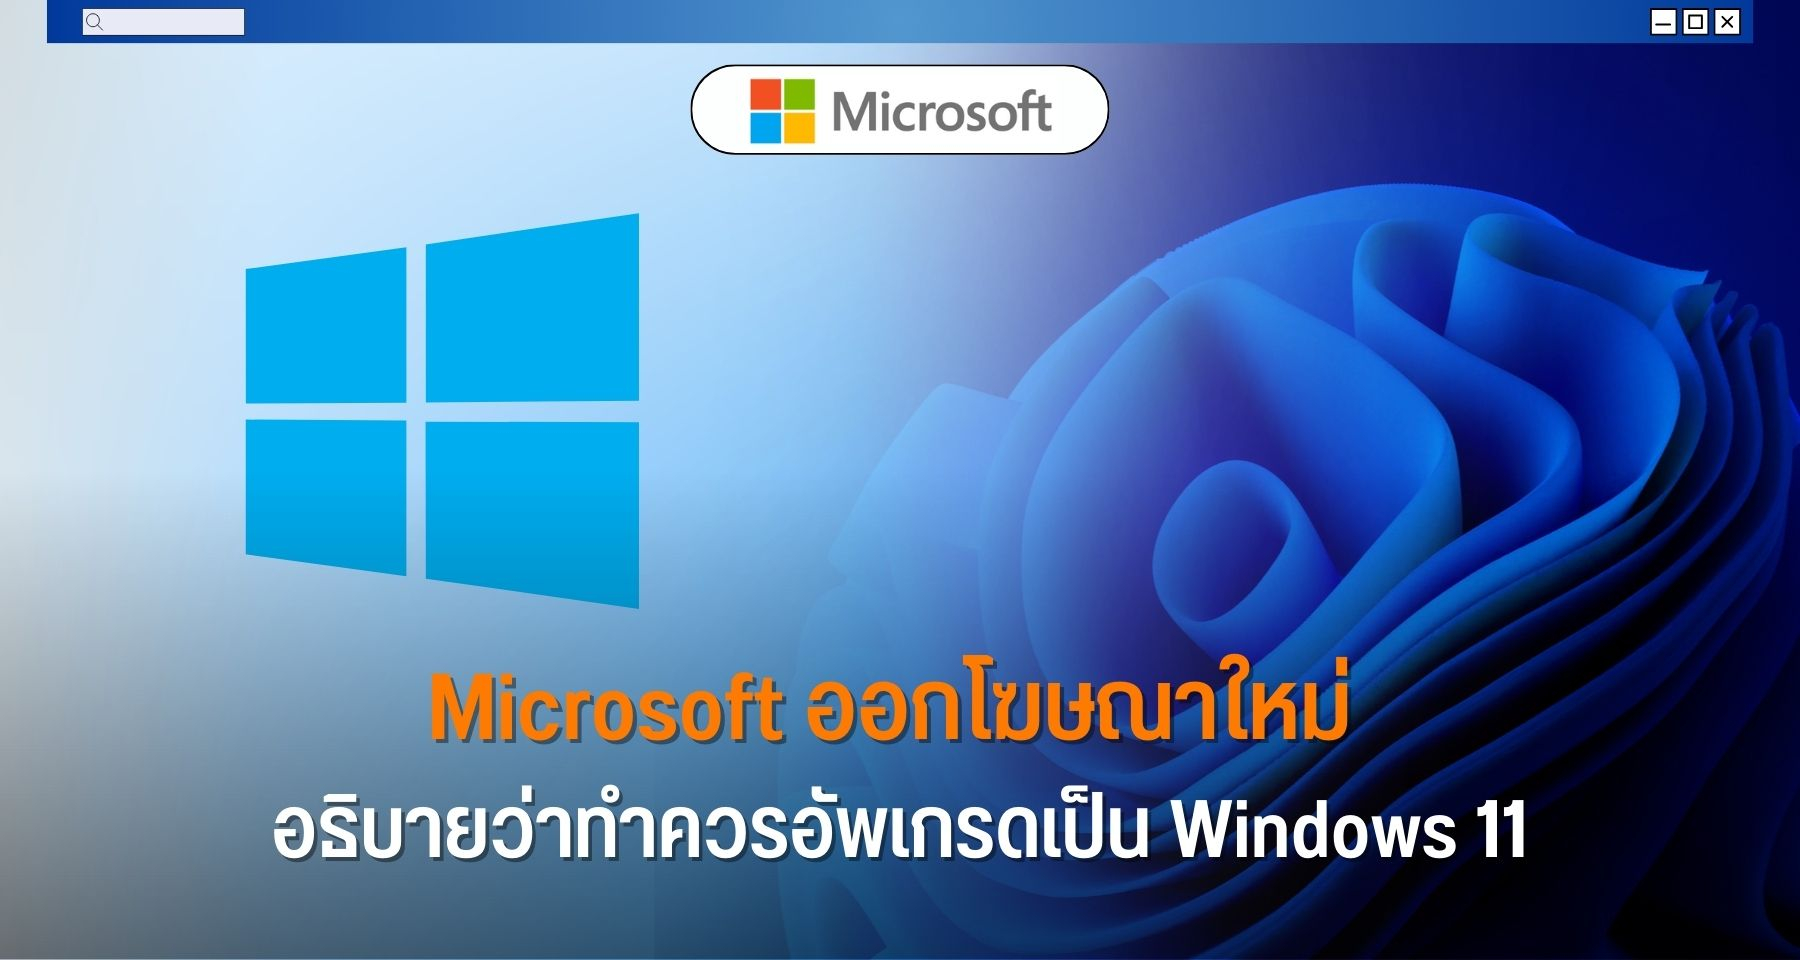 Microsoft ออกโฆษณาใหม่ อธิบายว่าทำควรอัพเกรดเป็น Windows 11